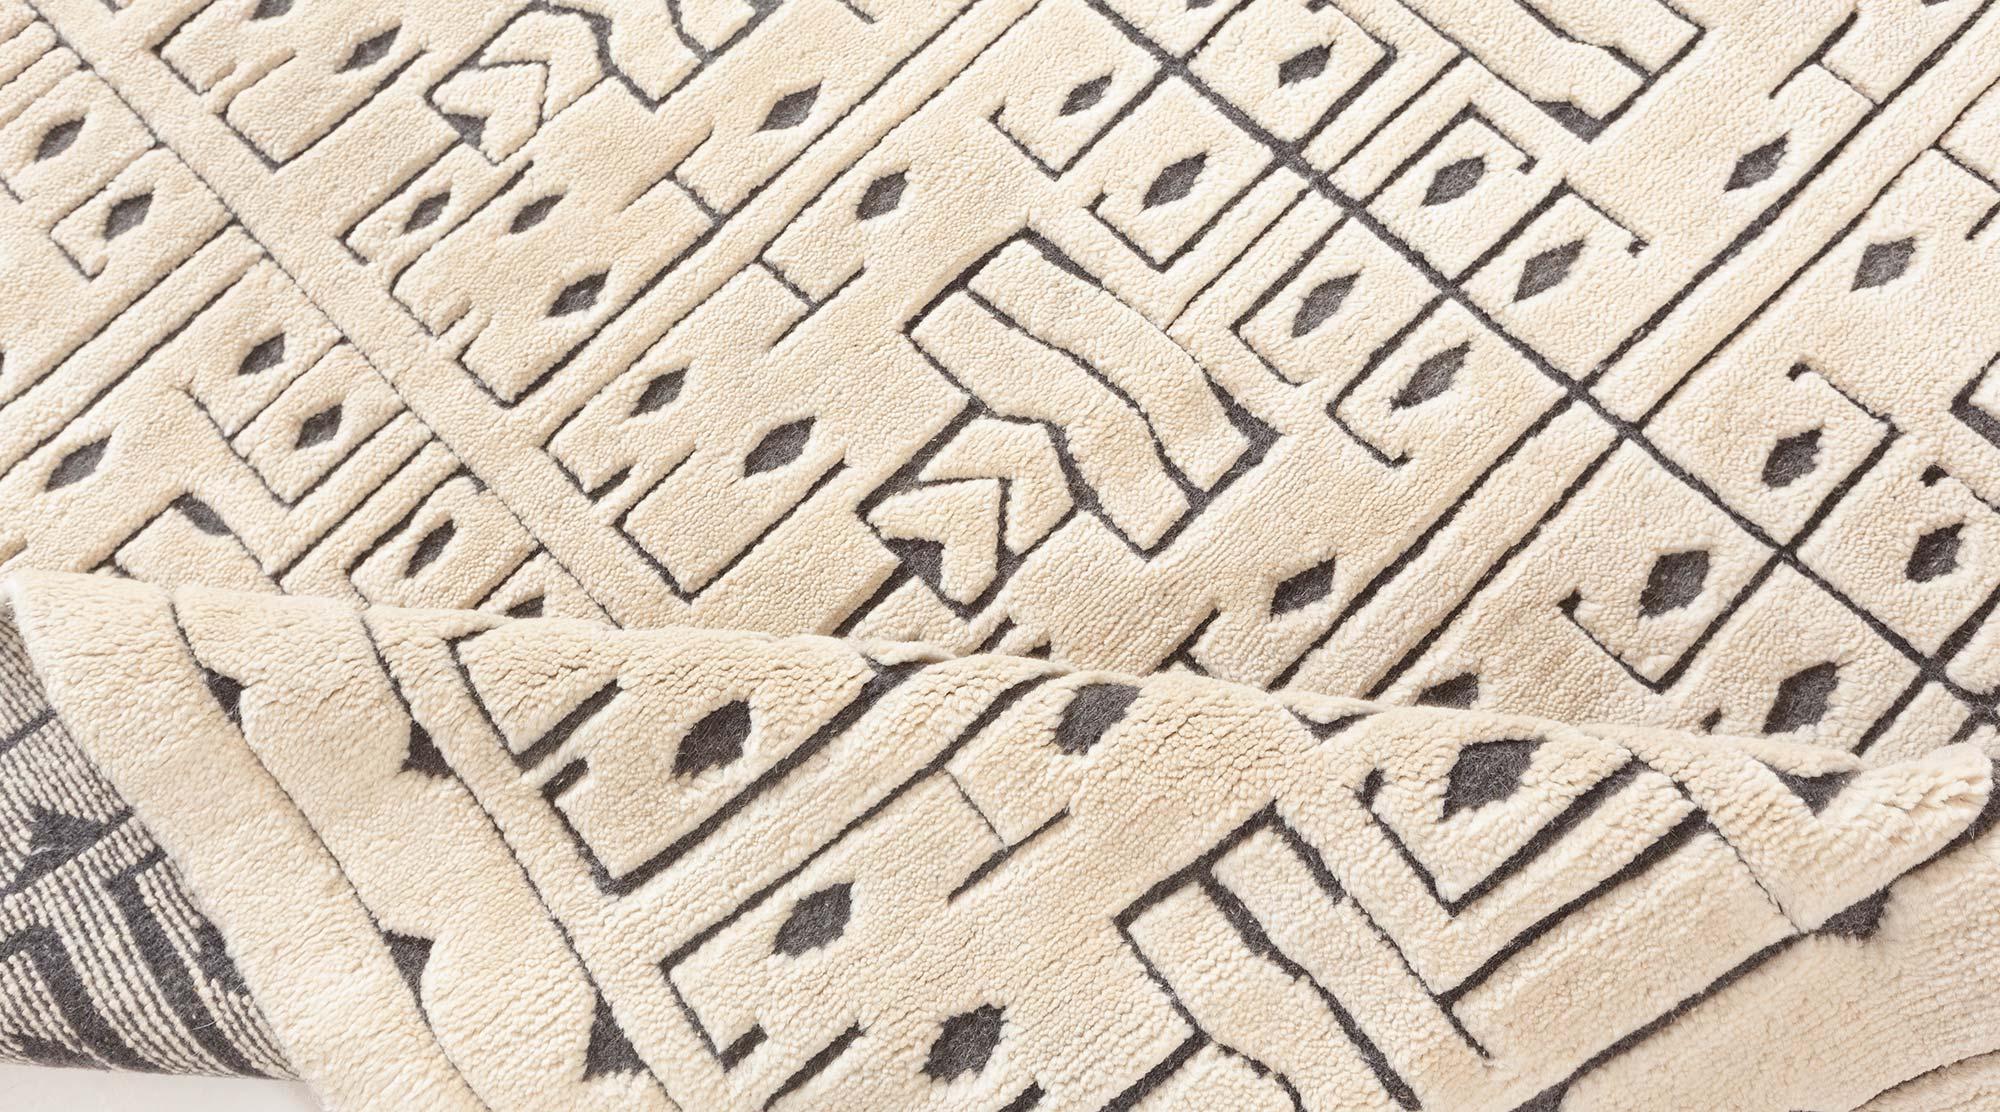 Contemporary Swedish Skvattram Style rug by Doris Leslie Blau
Size: 7'9